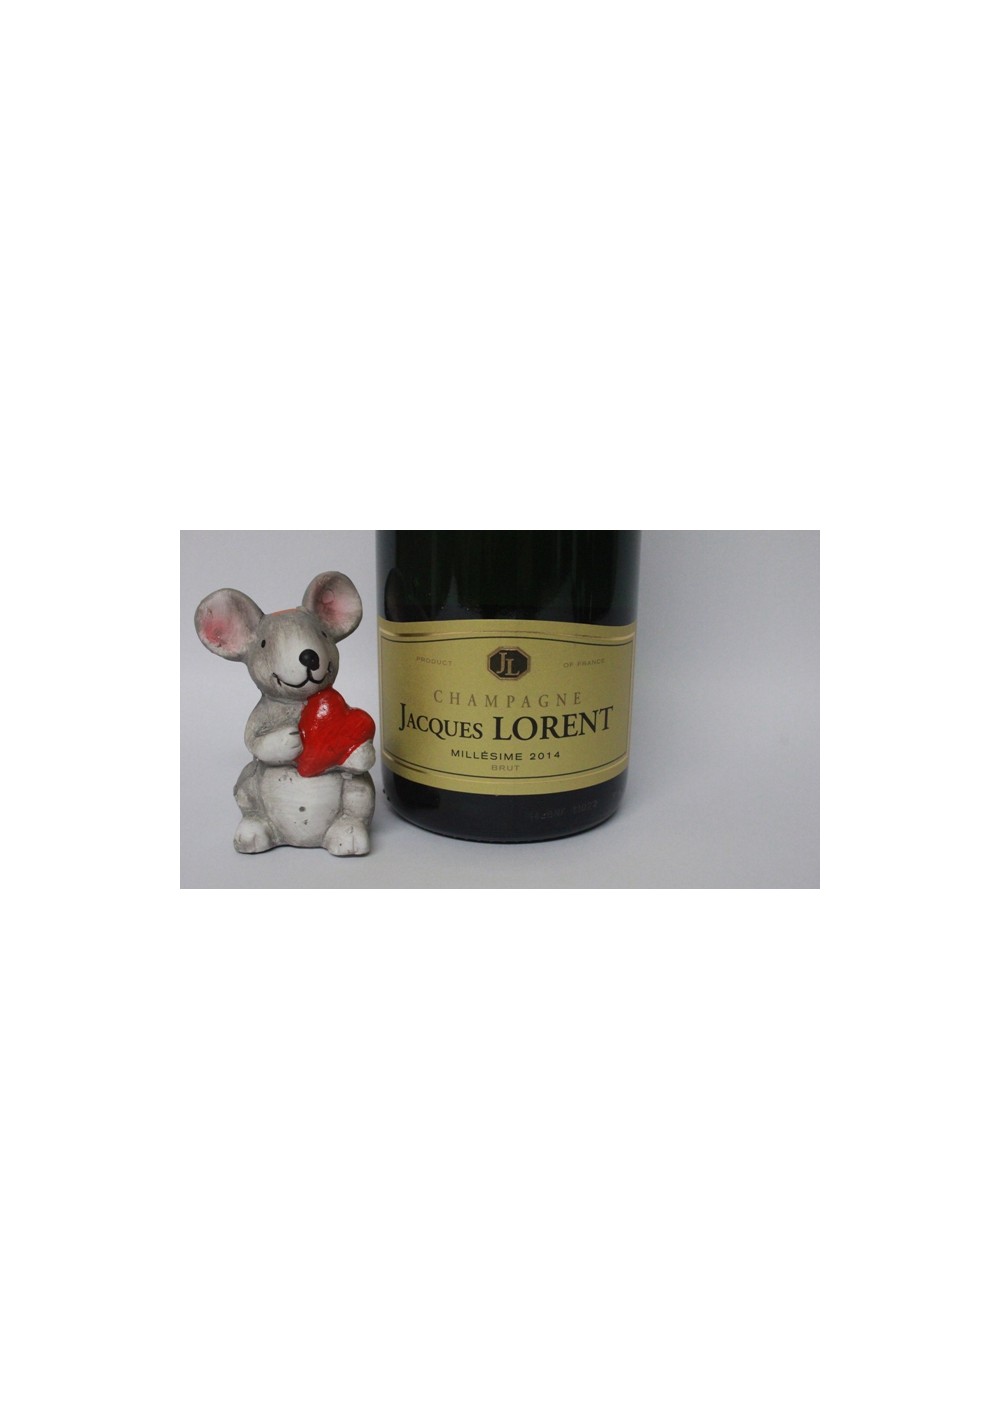 2014 - Jacques Lorent - Champagne  - (75 cl)